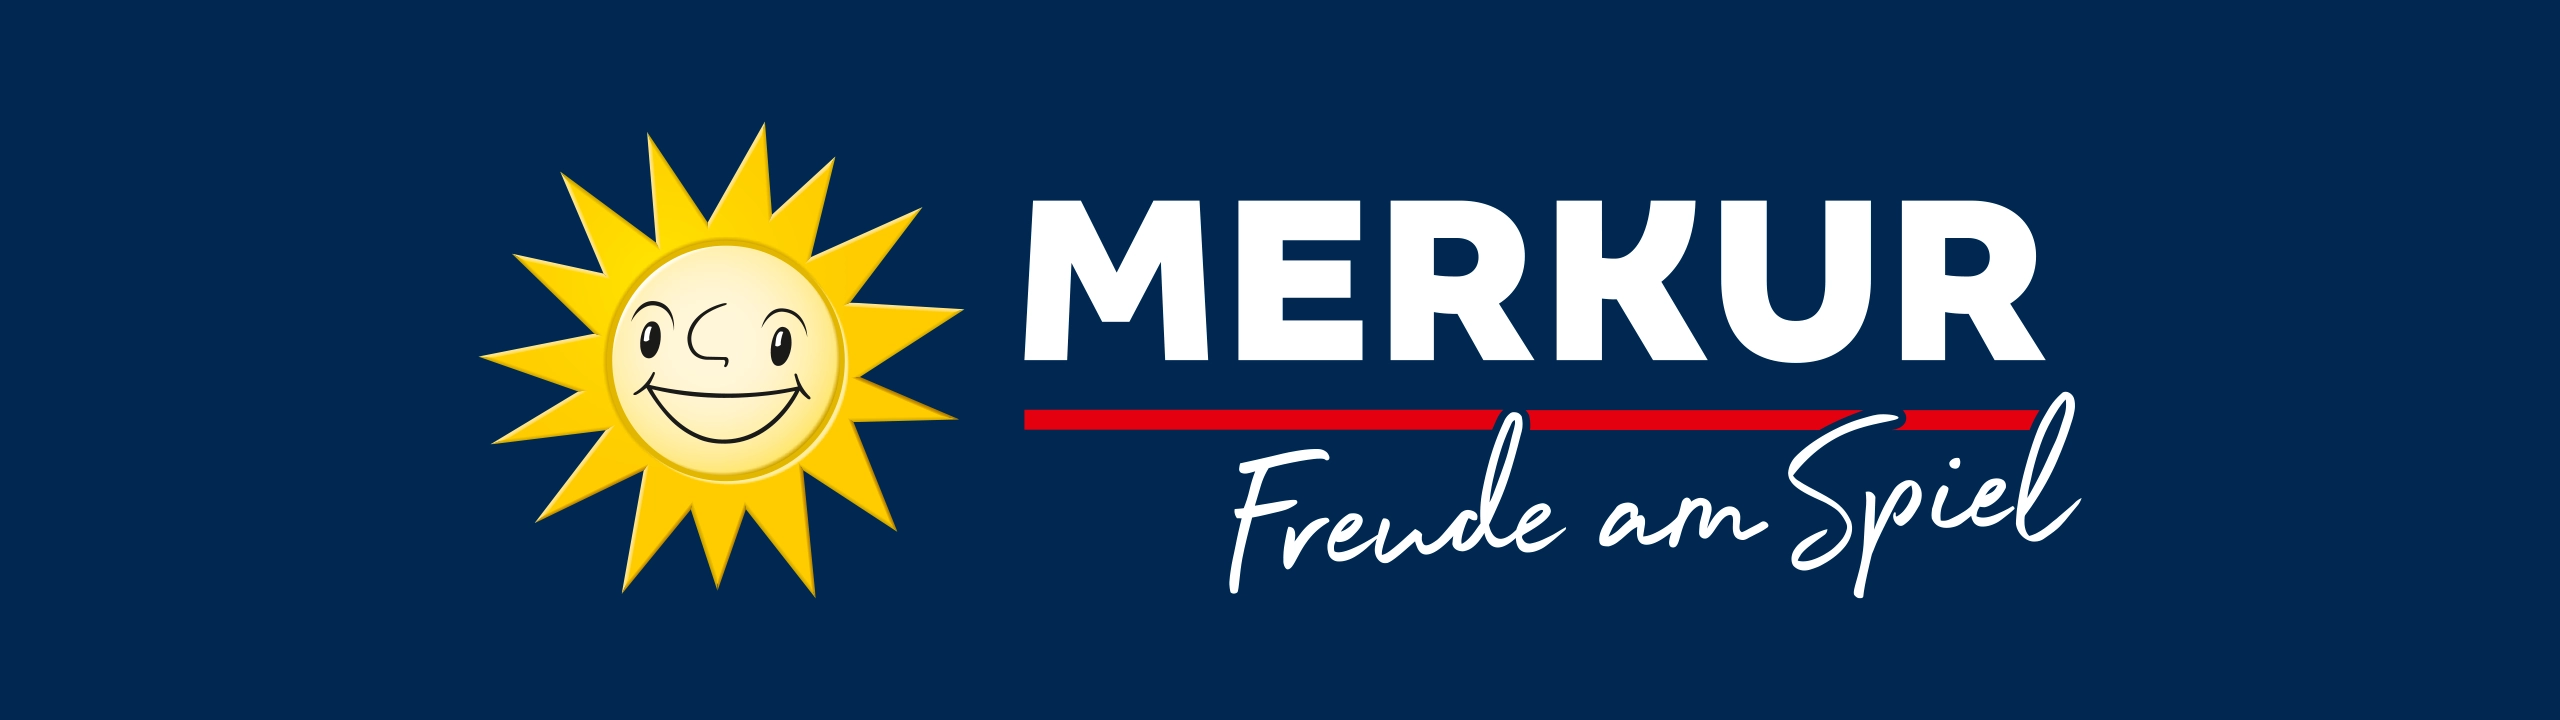 Merkur Freude am Spiel Logo © Gauselmann Group